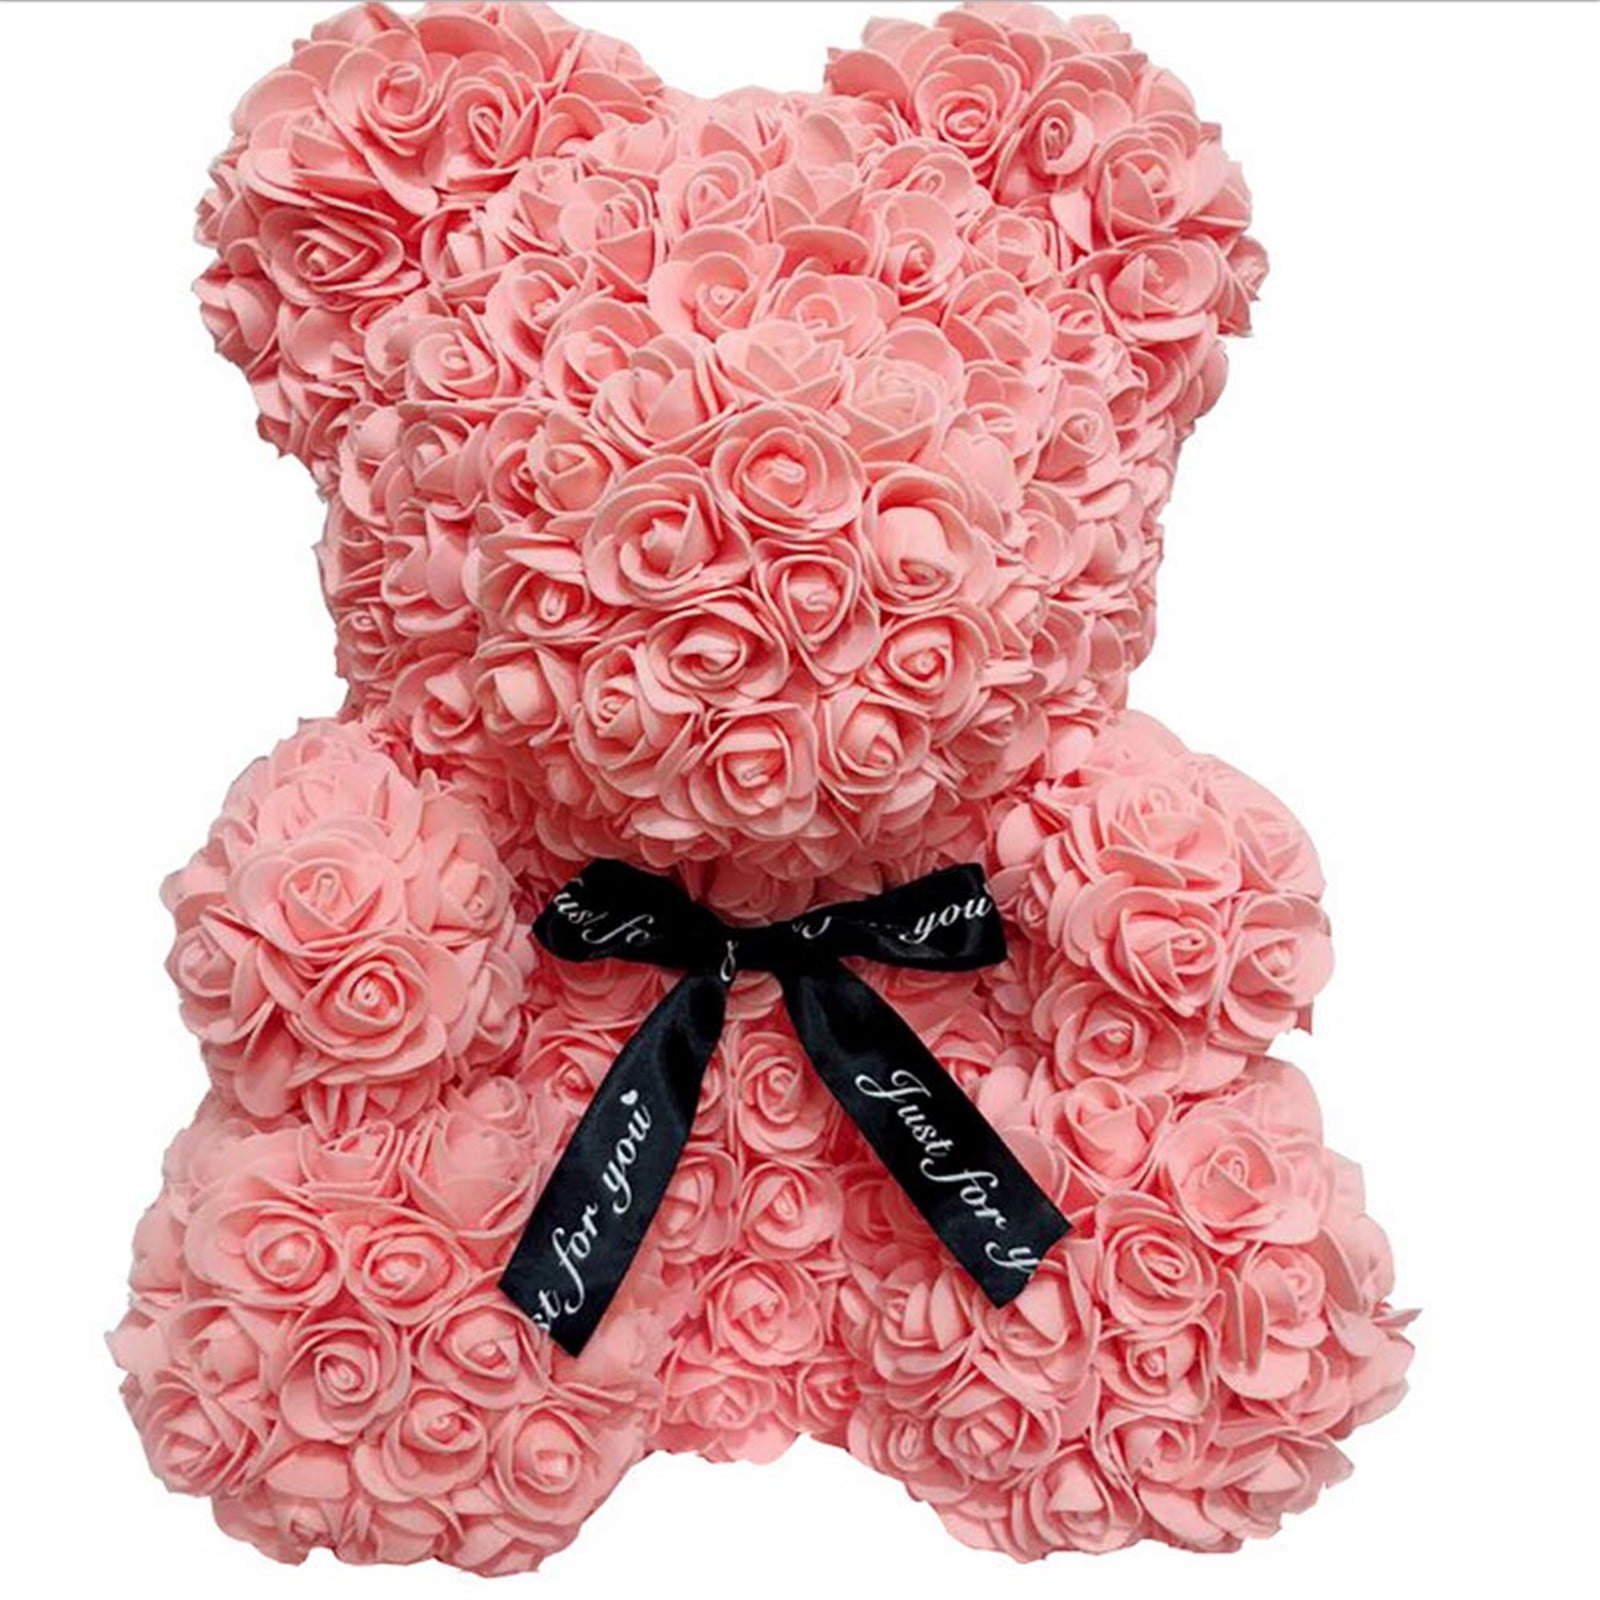 Details about   25CM Foam Rose Bear Doll Teddy Wedding Valentine Lovers Gifts Birthday Decor NEW 